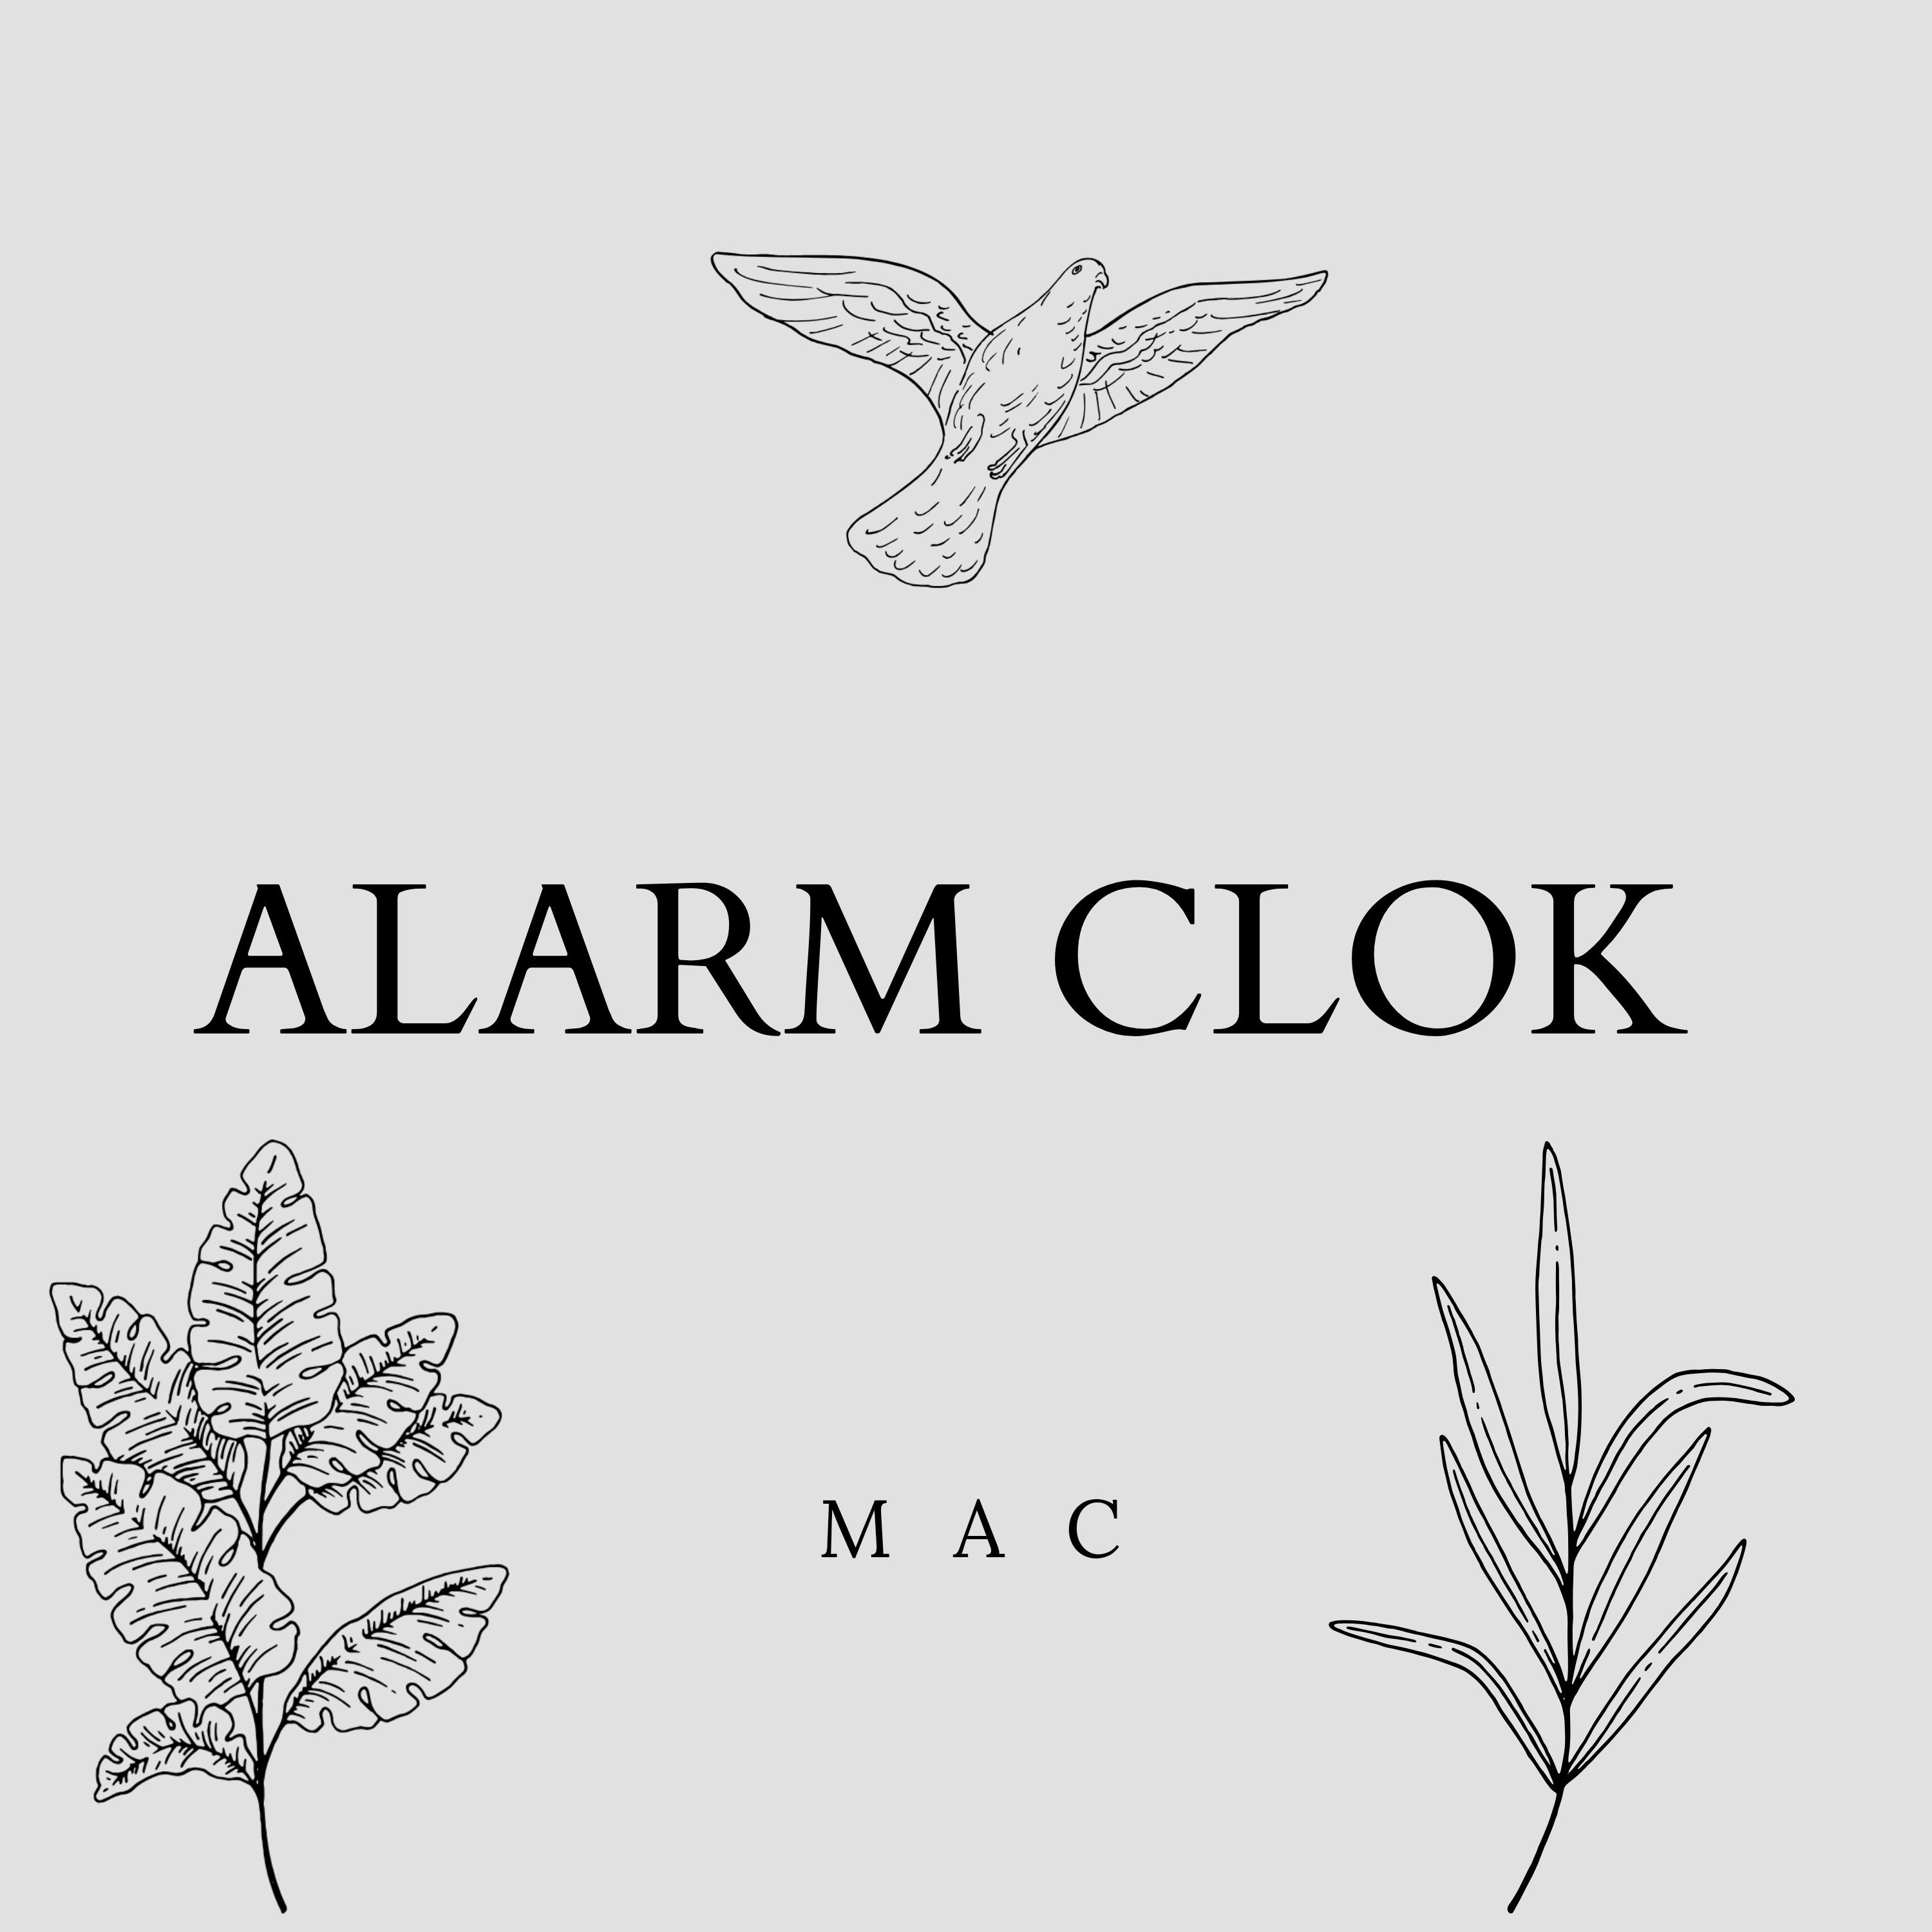 Mac - Alarm Clock